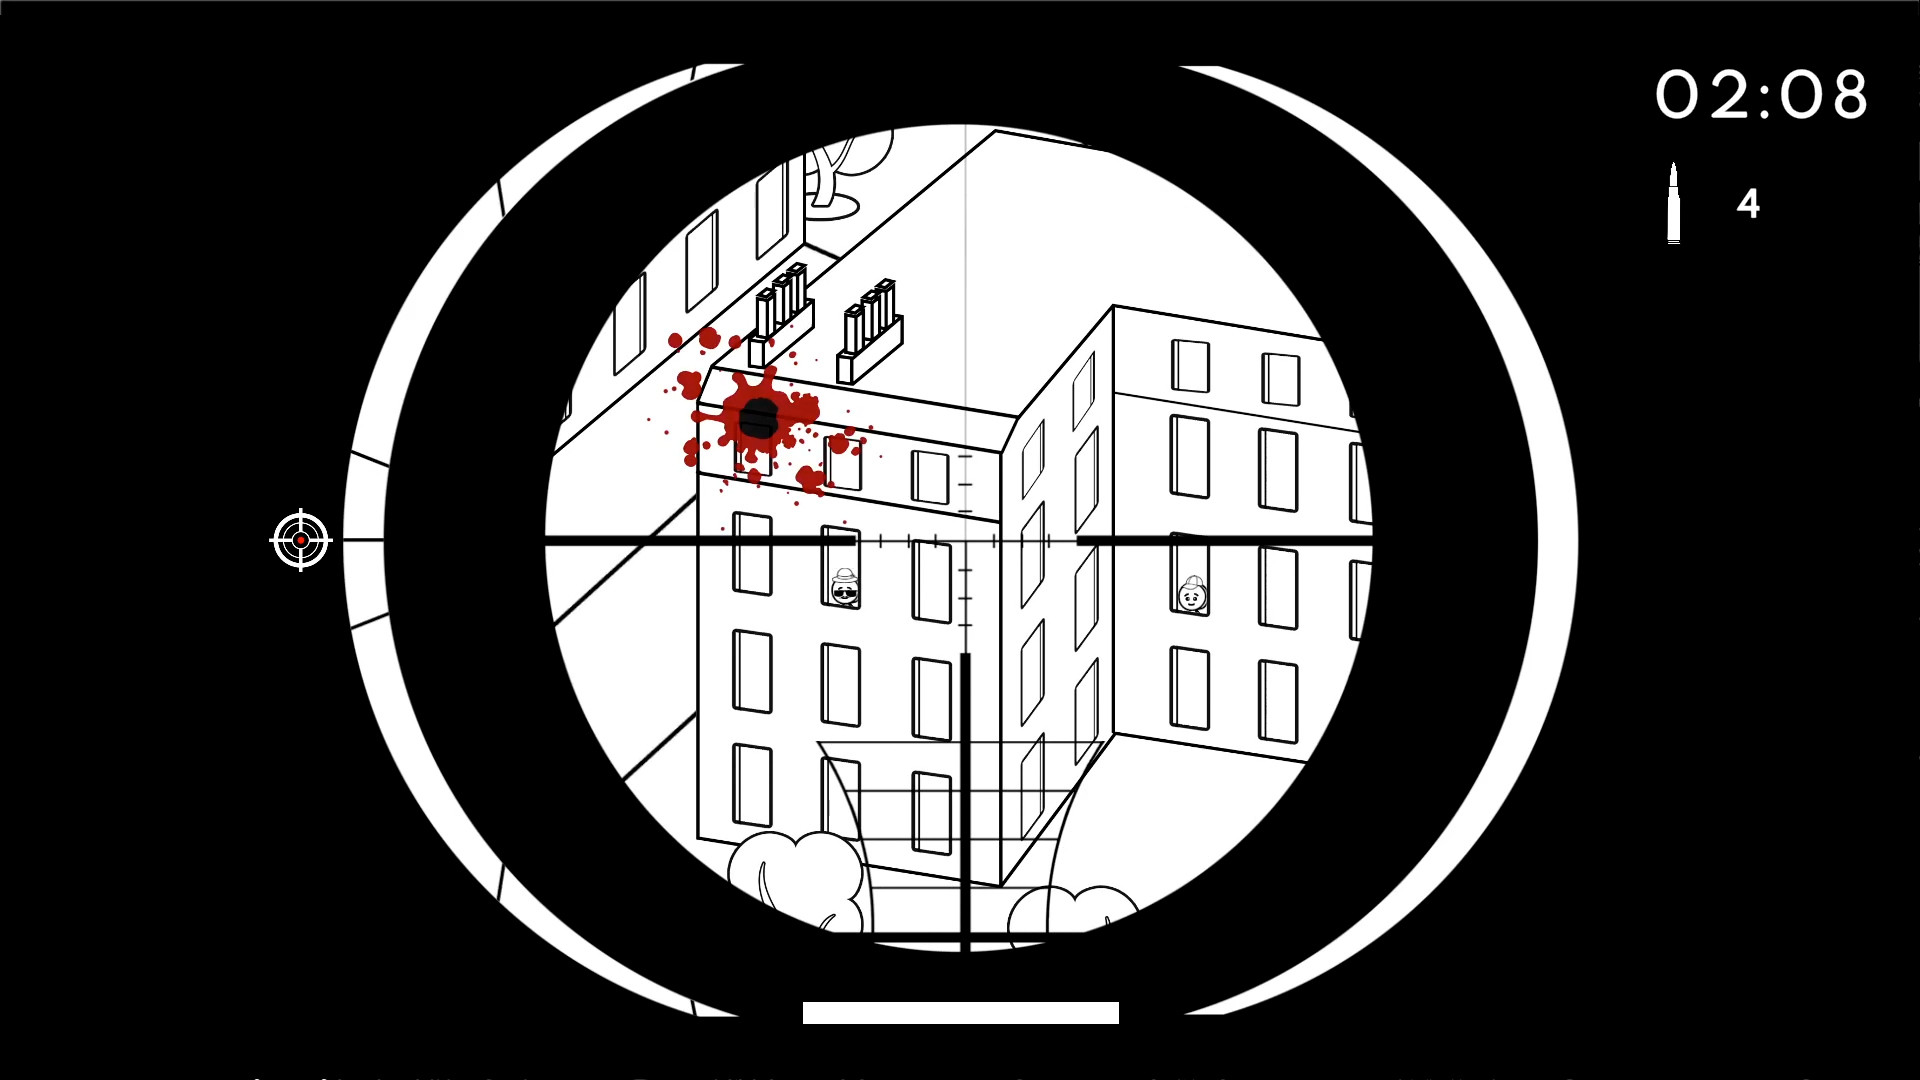 Geometric Sniper - Blood In Paris Steam CD Key